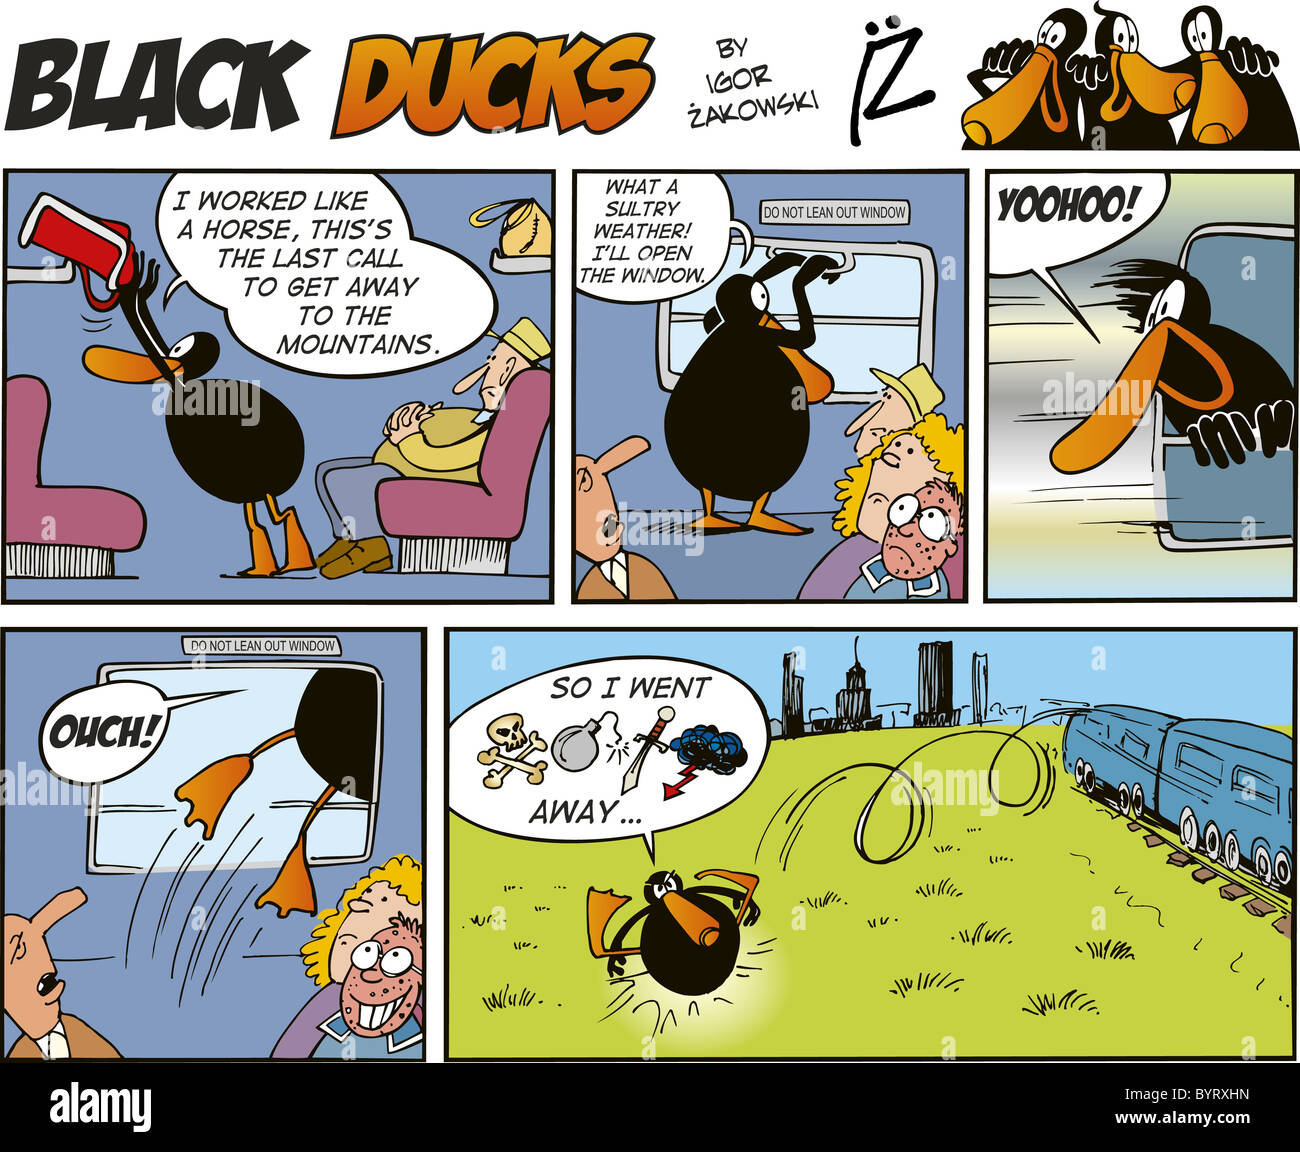 Black Ducks Comic Strip episode 30 Stock Photo